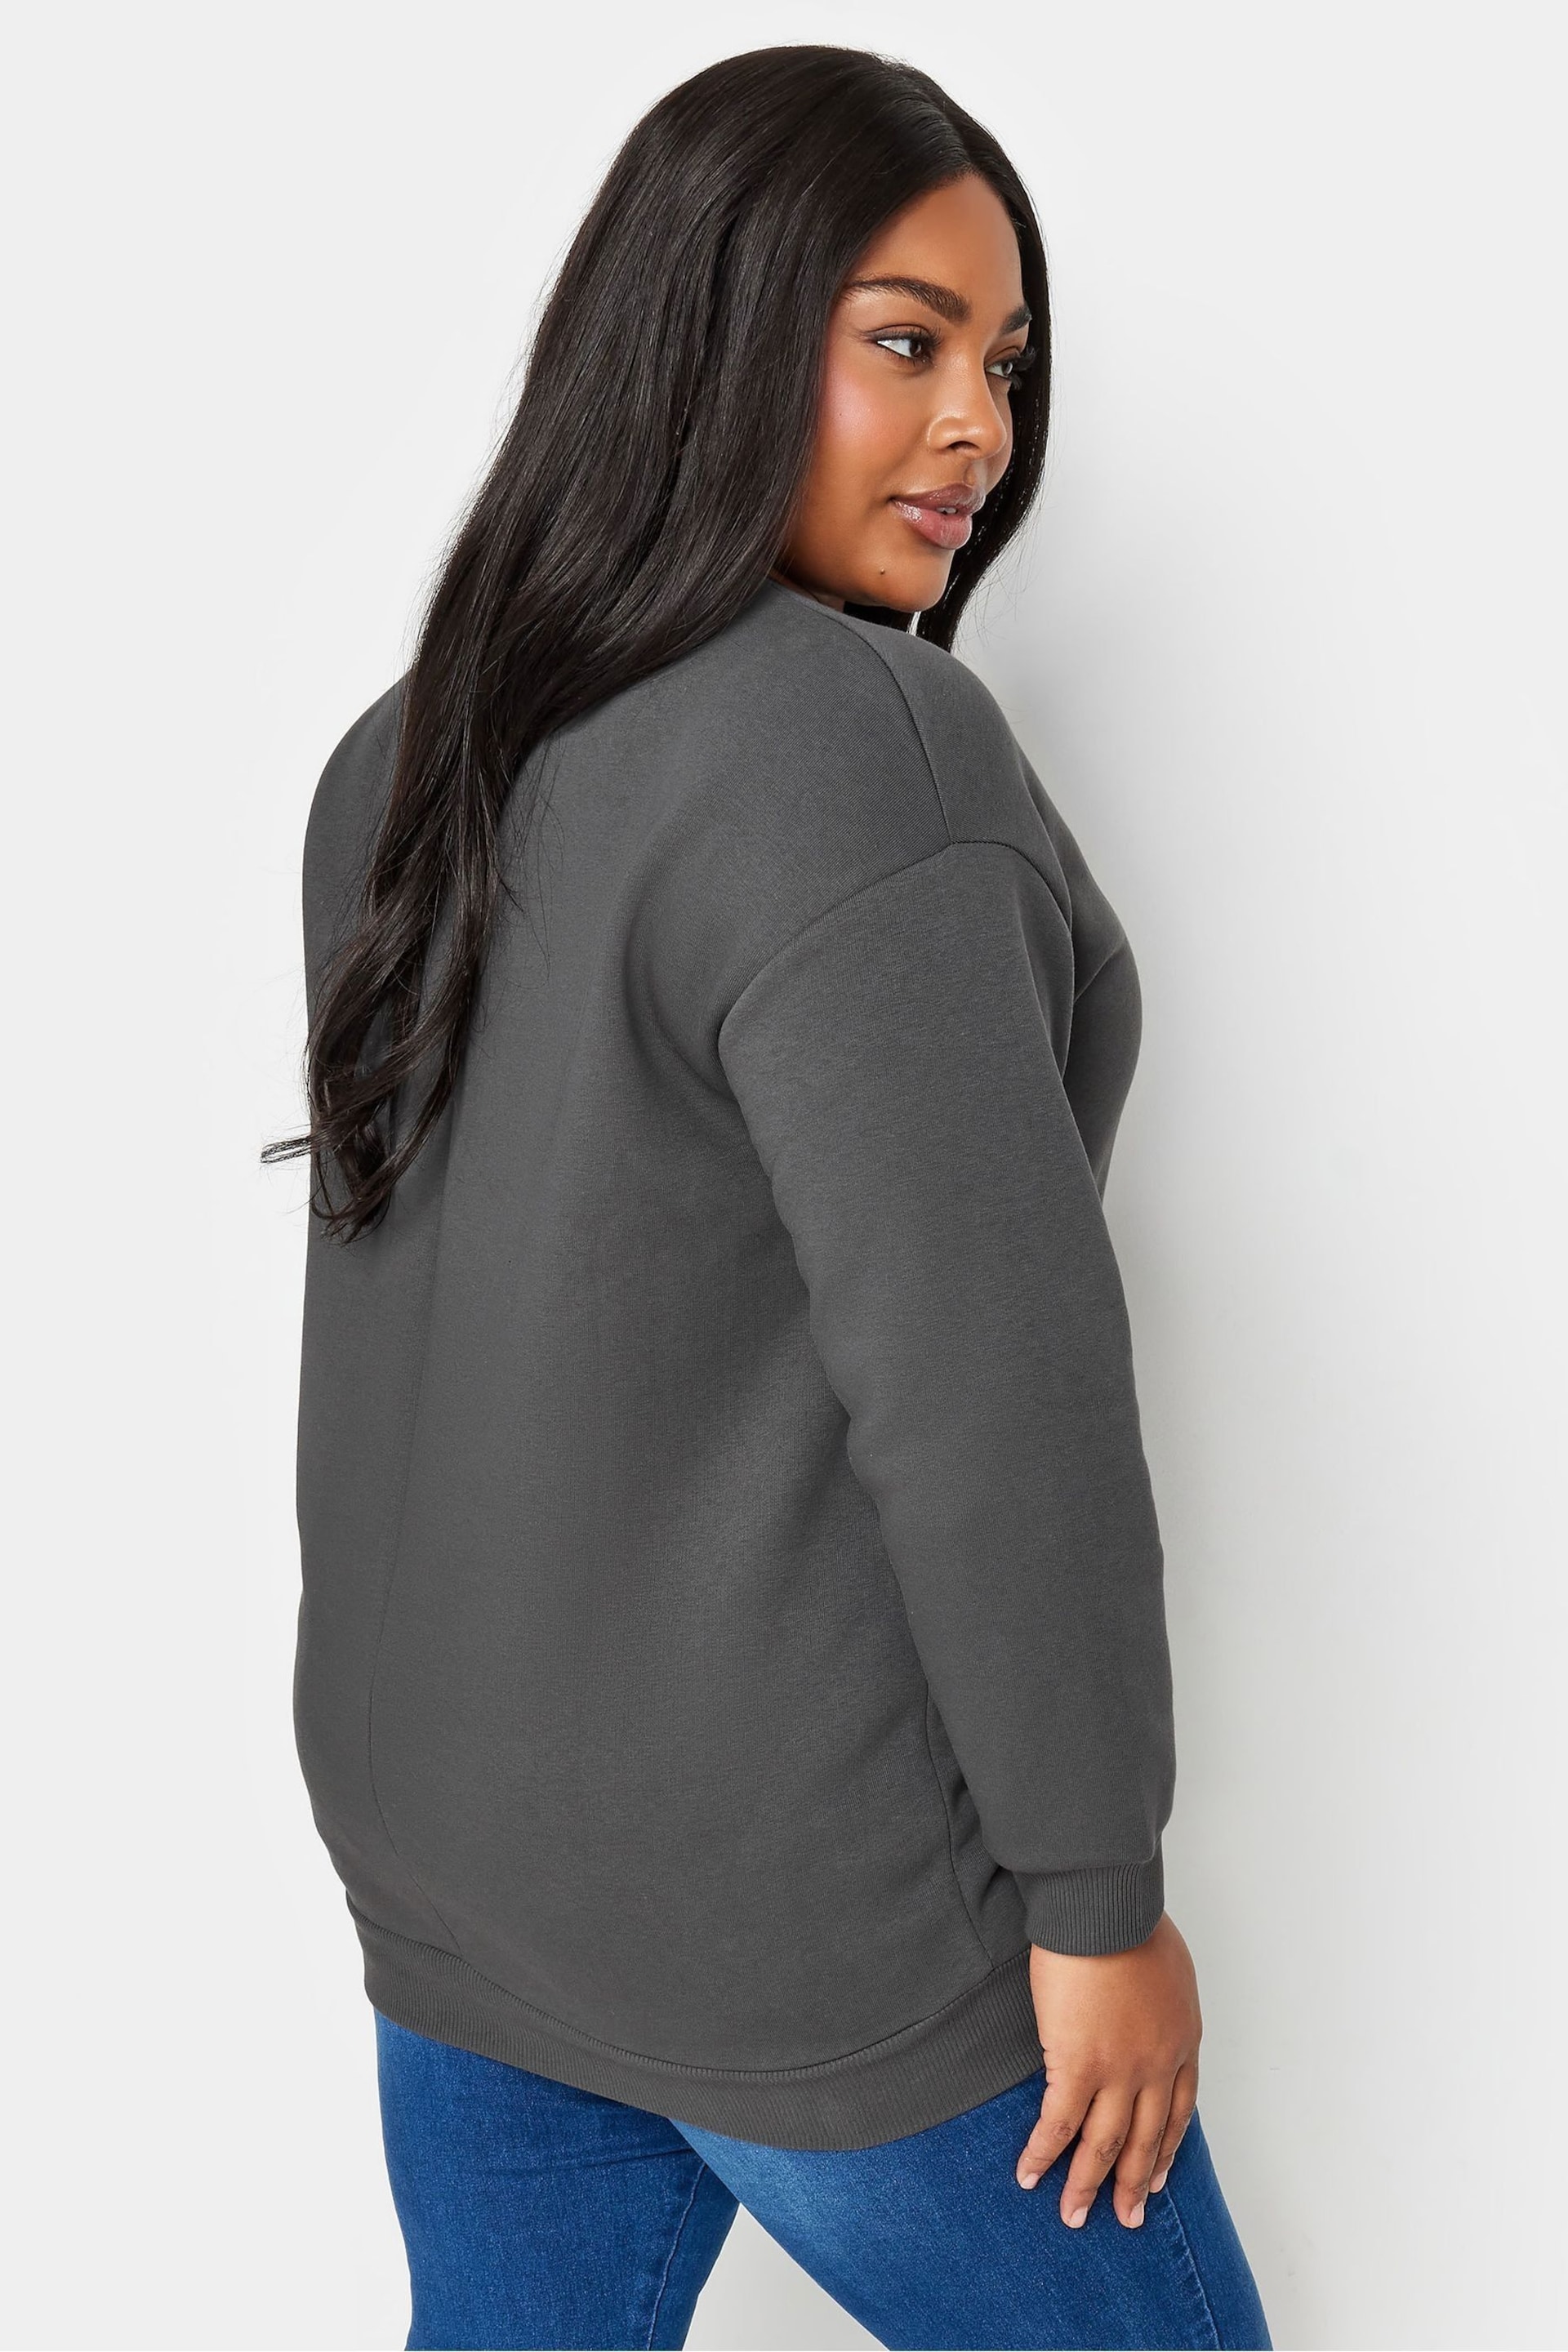 Yours Curve Grey Embellished Slogan Sweatshirt - Image 2 of 4